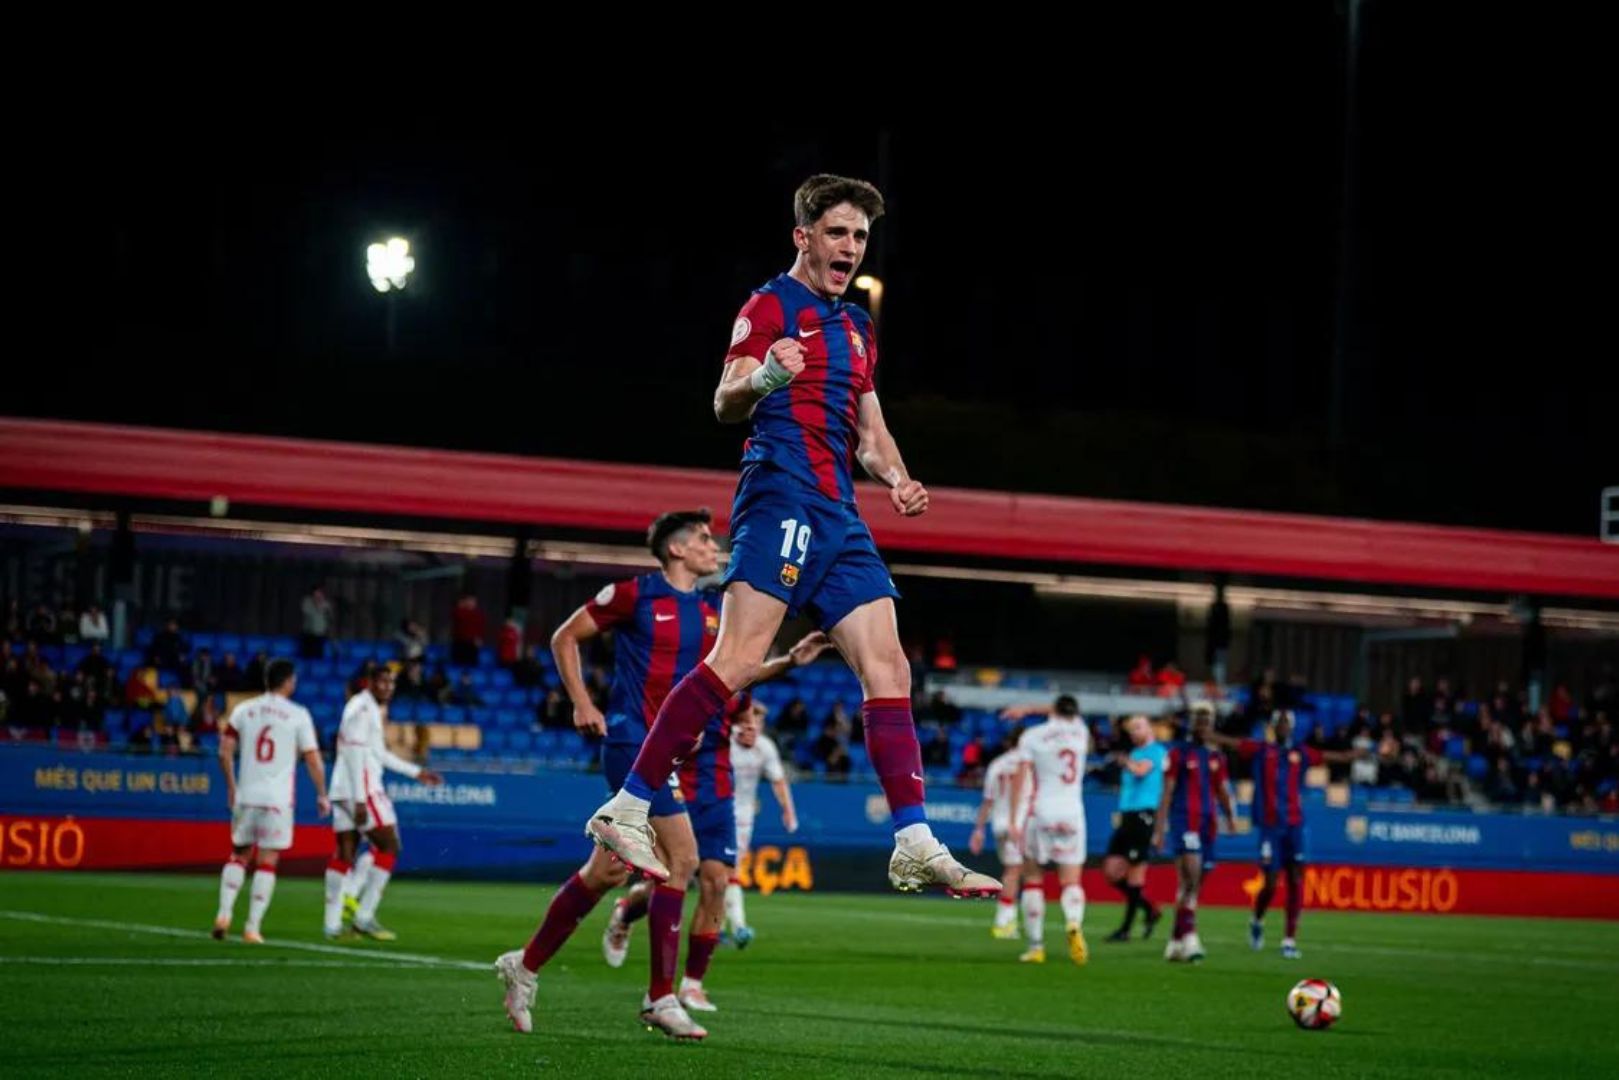 Pau Victor of Barcelona Atletic celebrating after scoring a goal against CyD Leonesa.